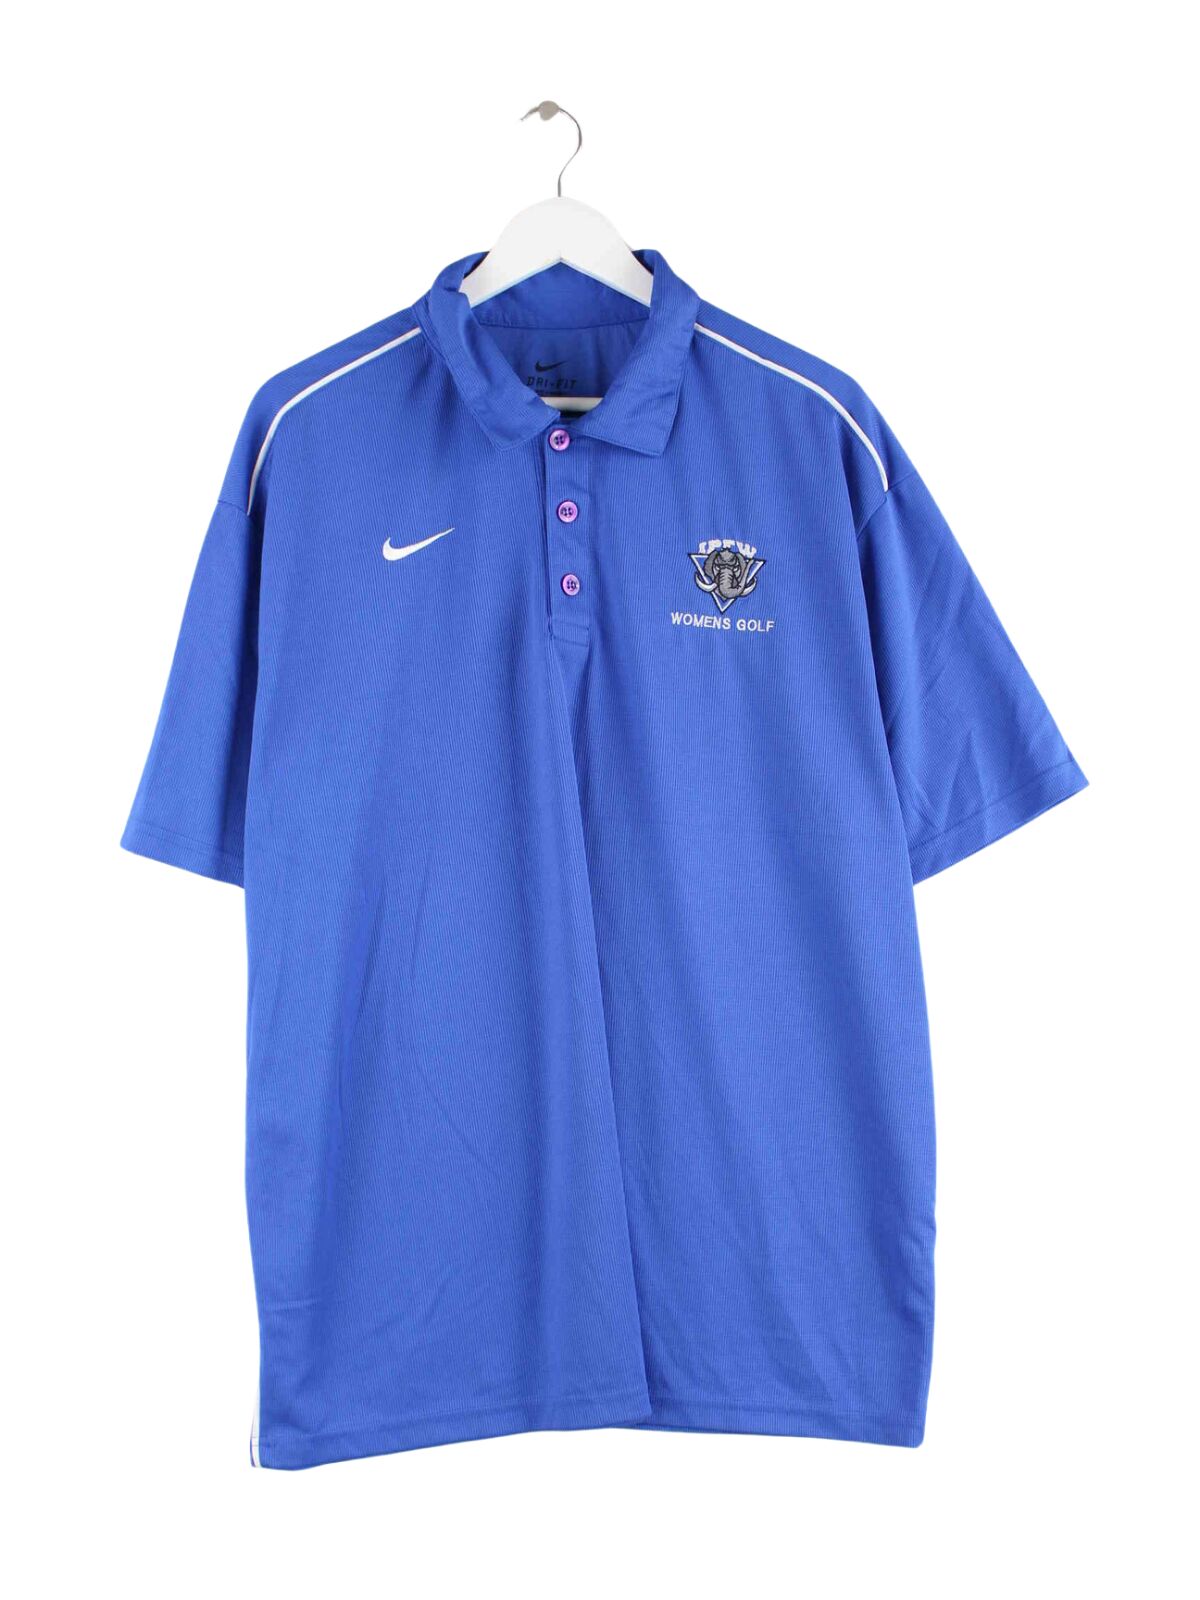 Nike Damen Embroidered Womens Golf Jersey Blau XL (front image)